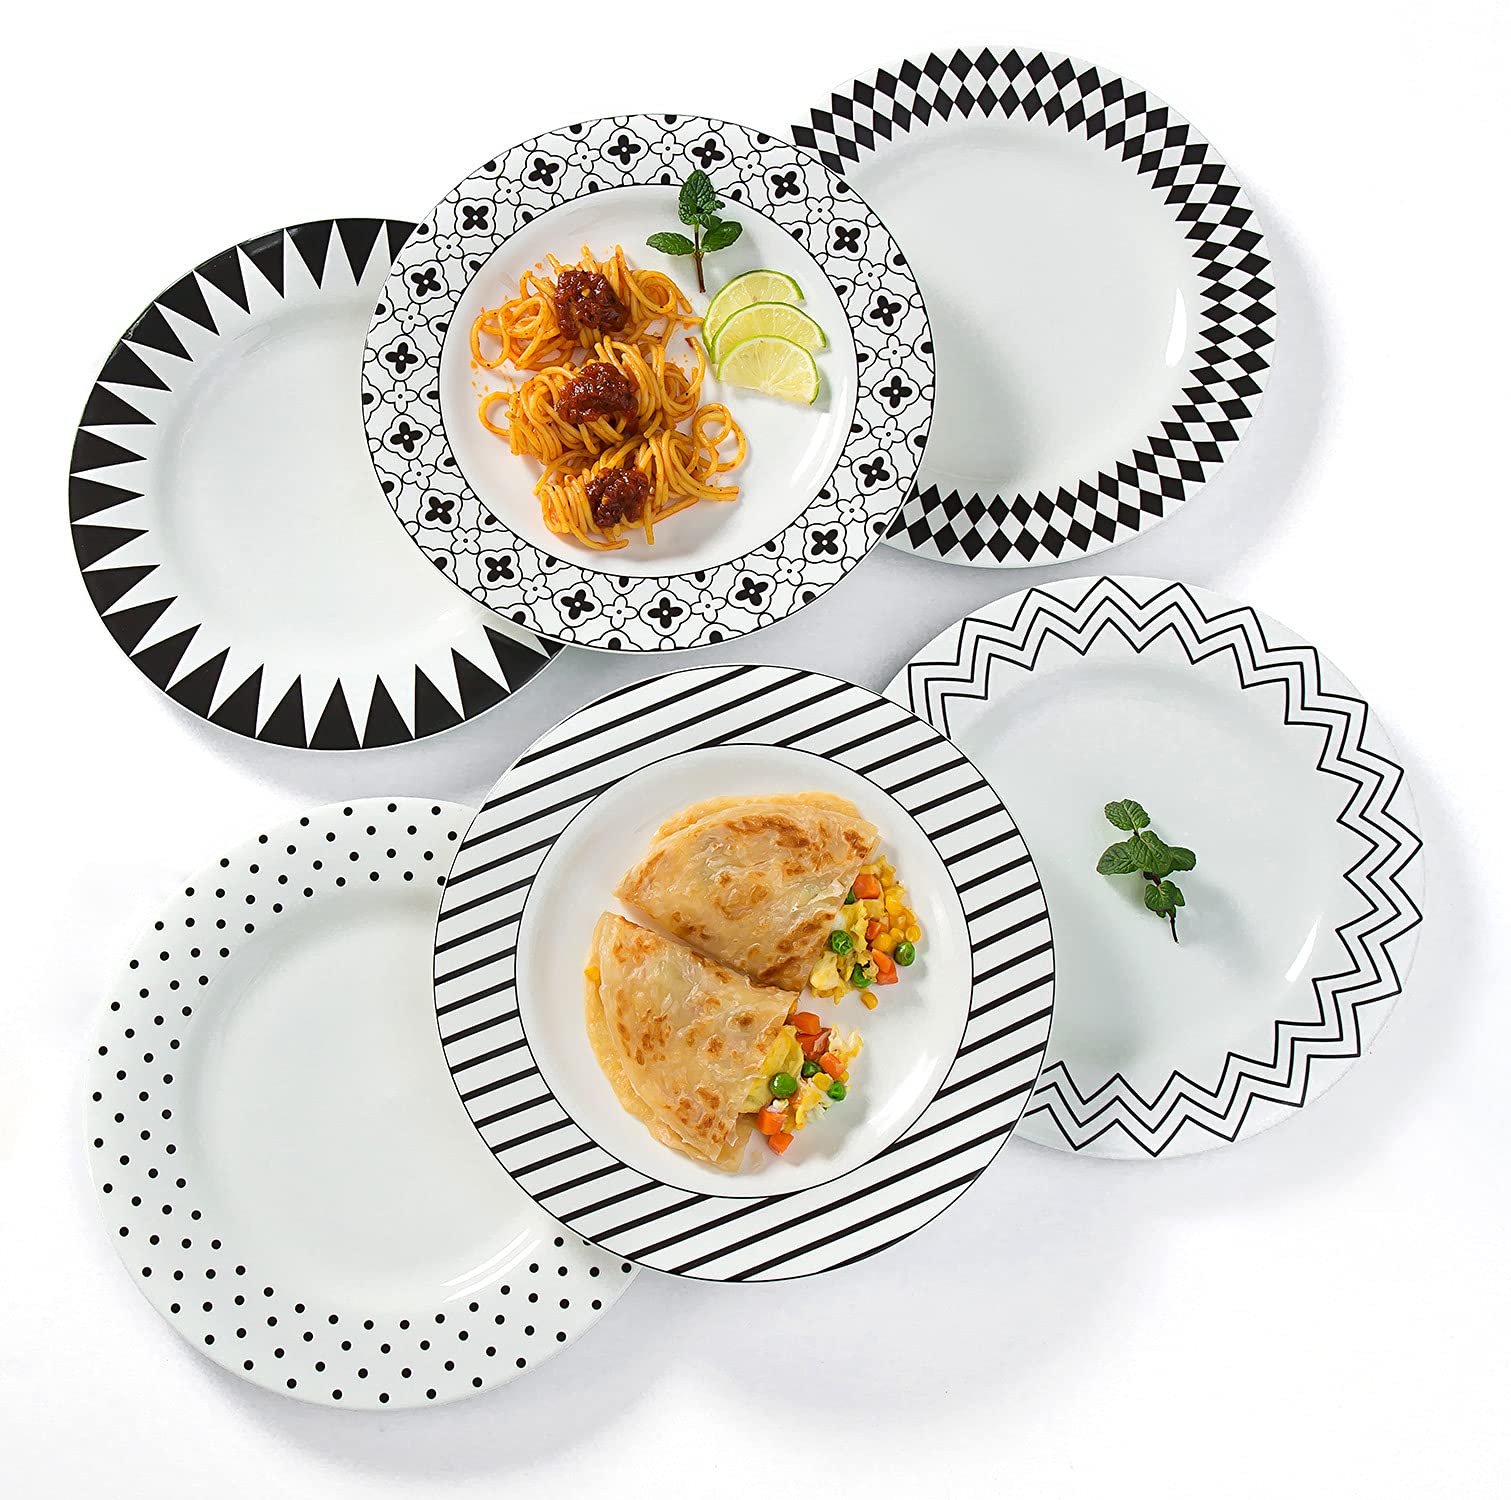 AnBnCn 10 Inches Porcelain Dinner Plates, Large Serving Plate Set, 6-Different Motifs Assorted Patterns, Set of 6